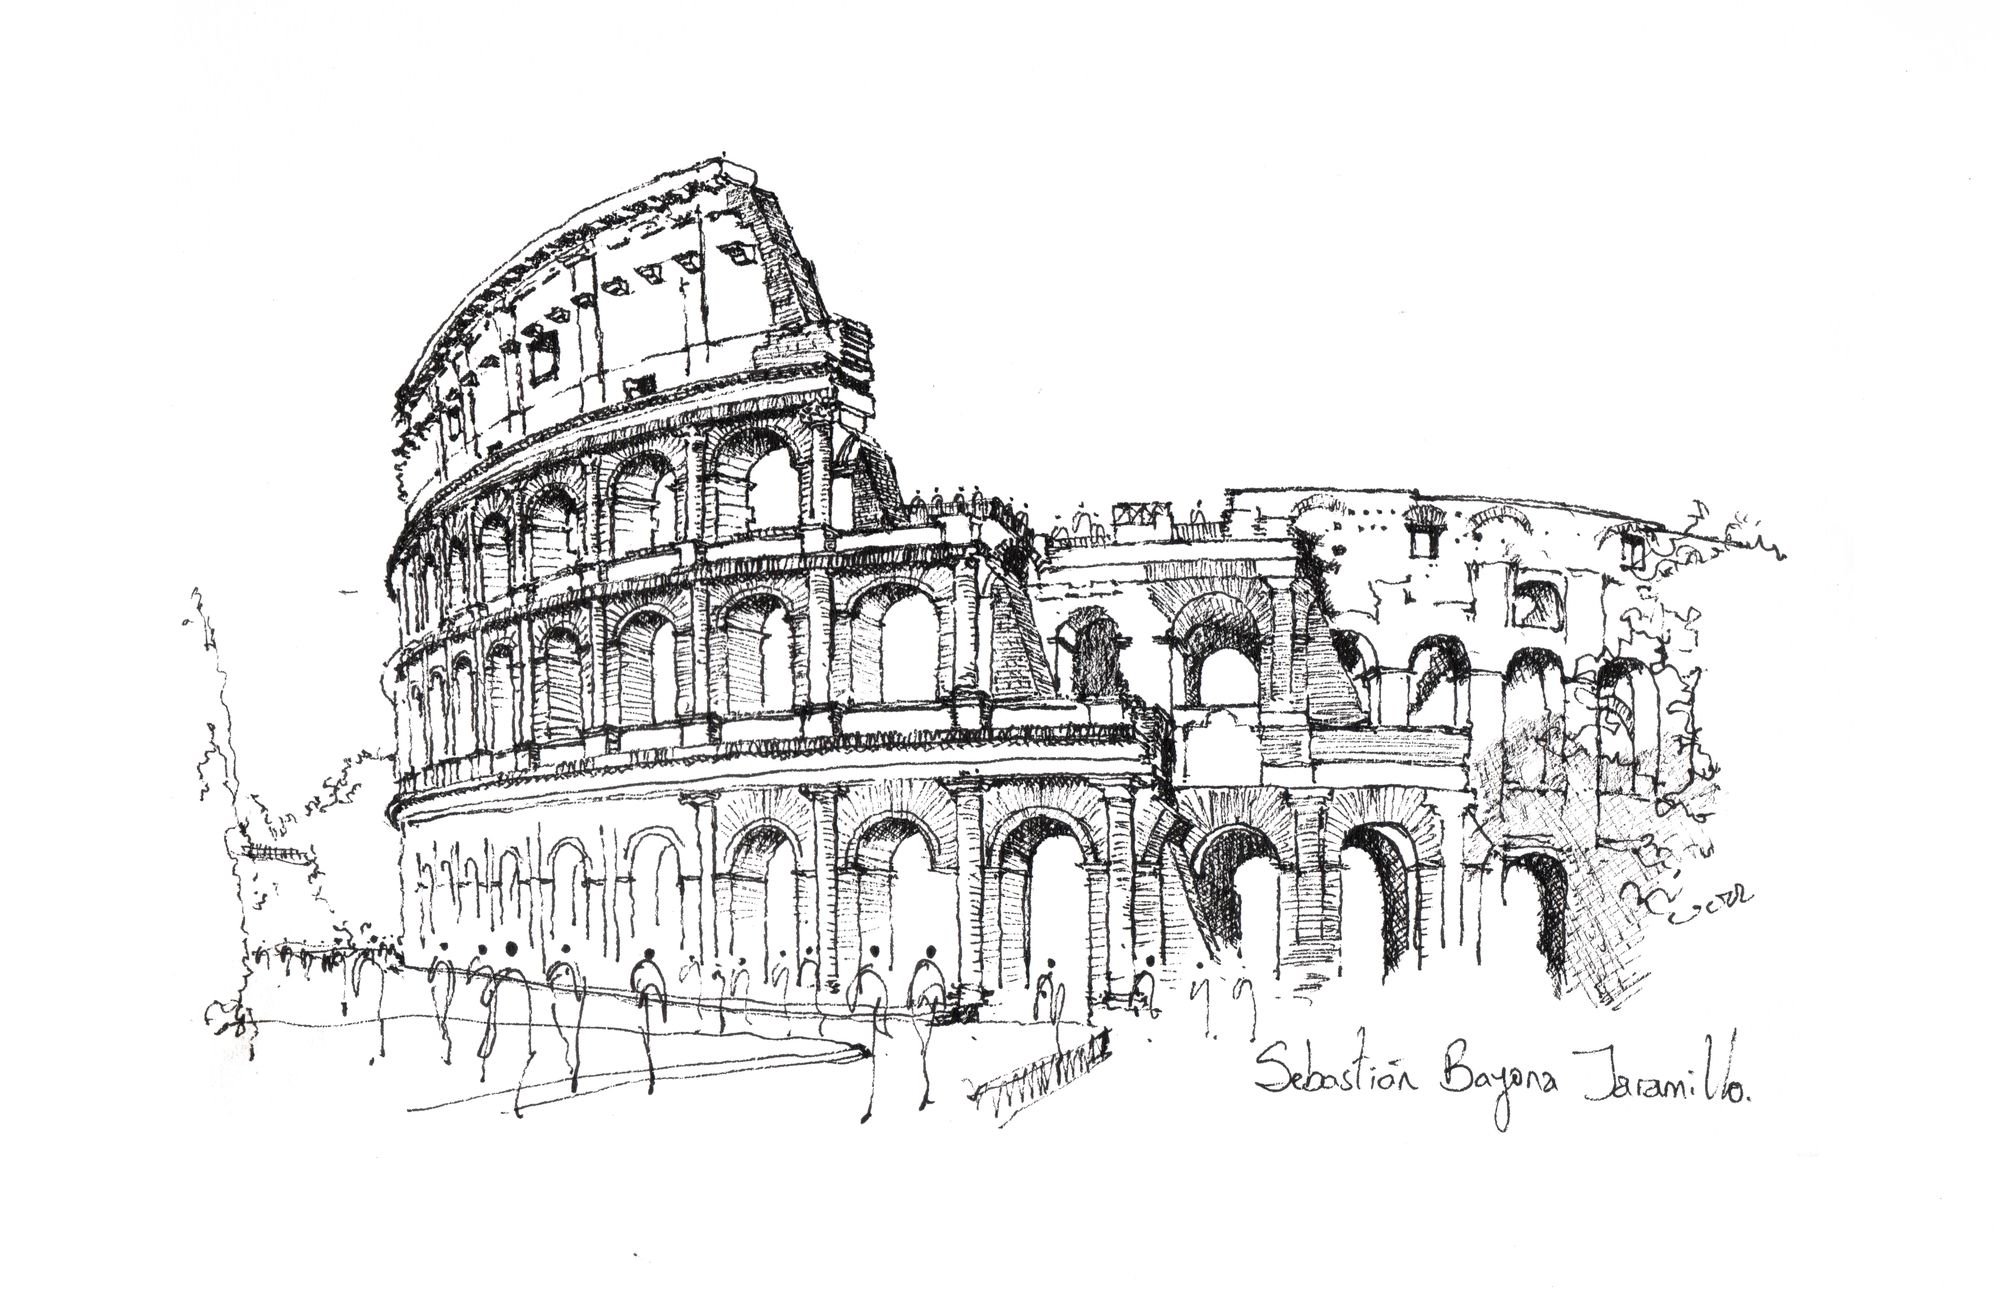 Колизей в Риме